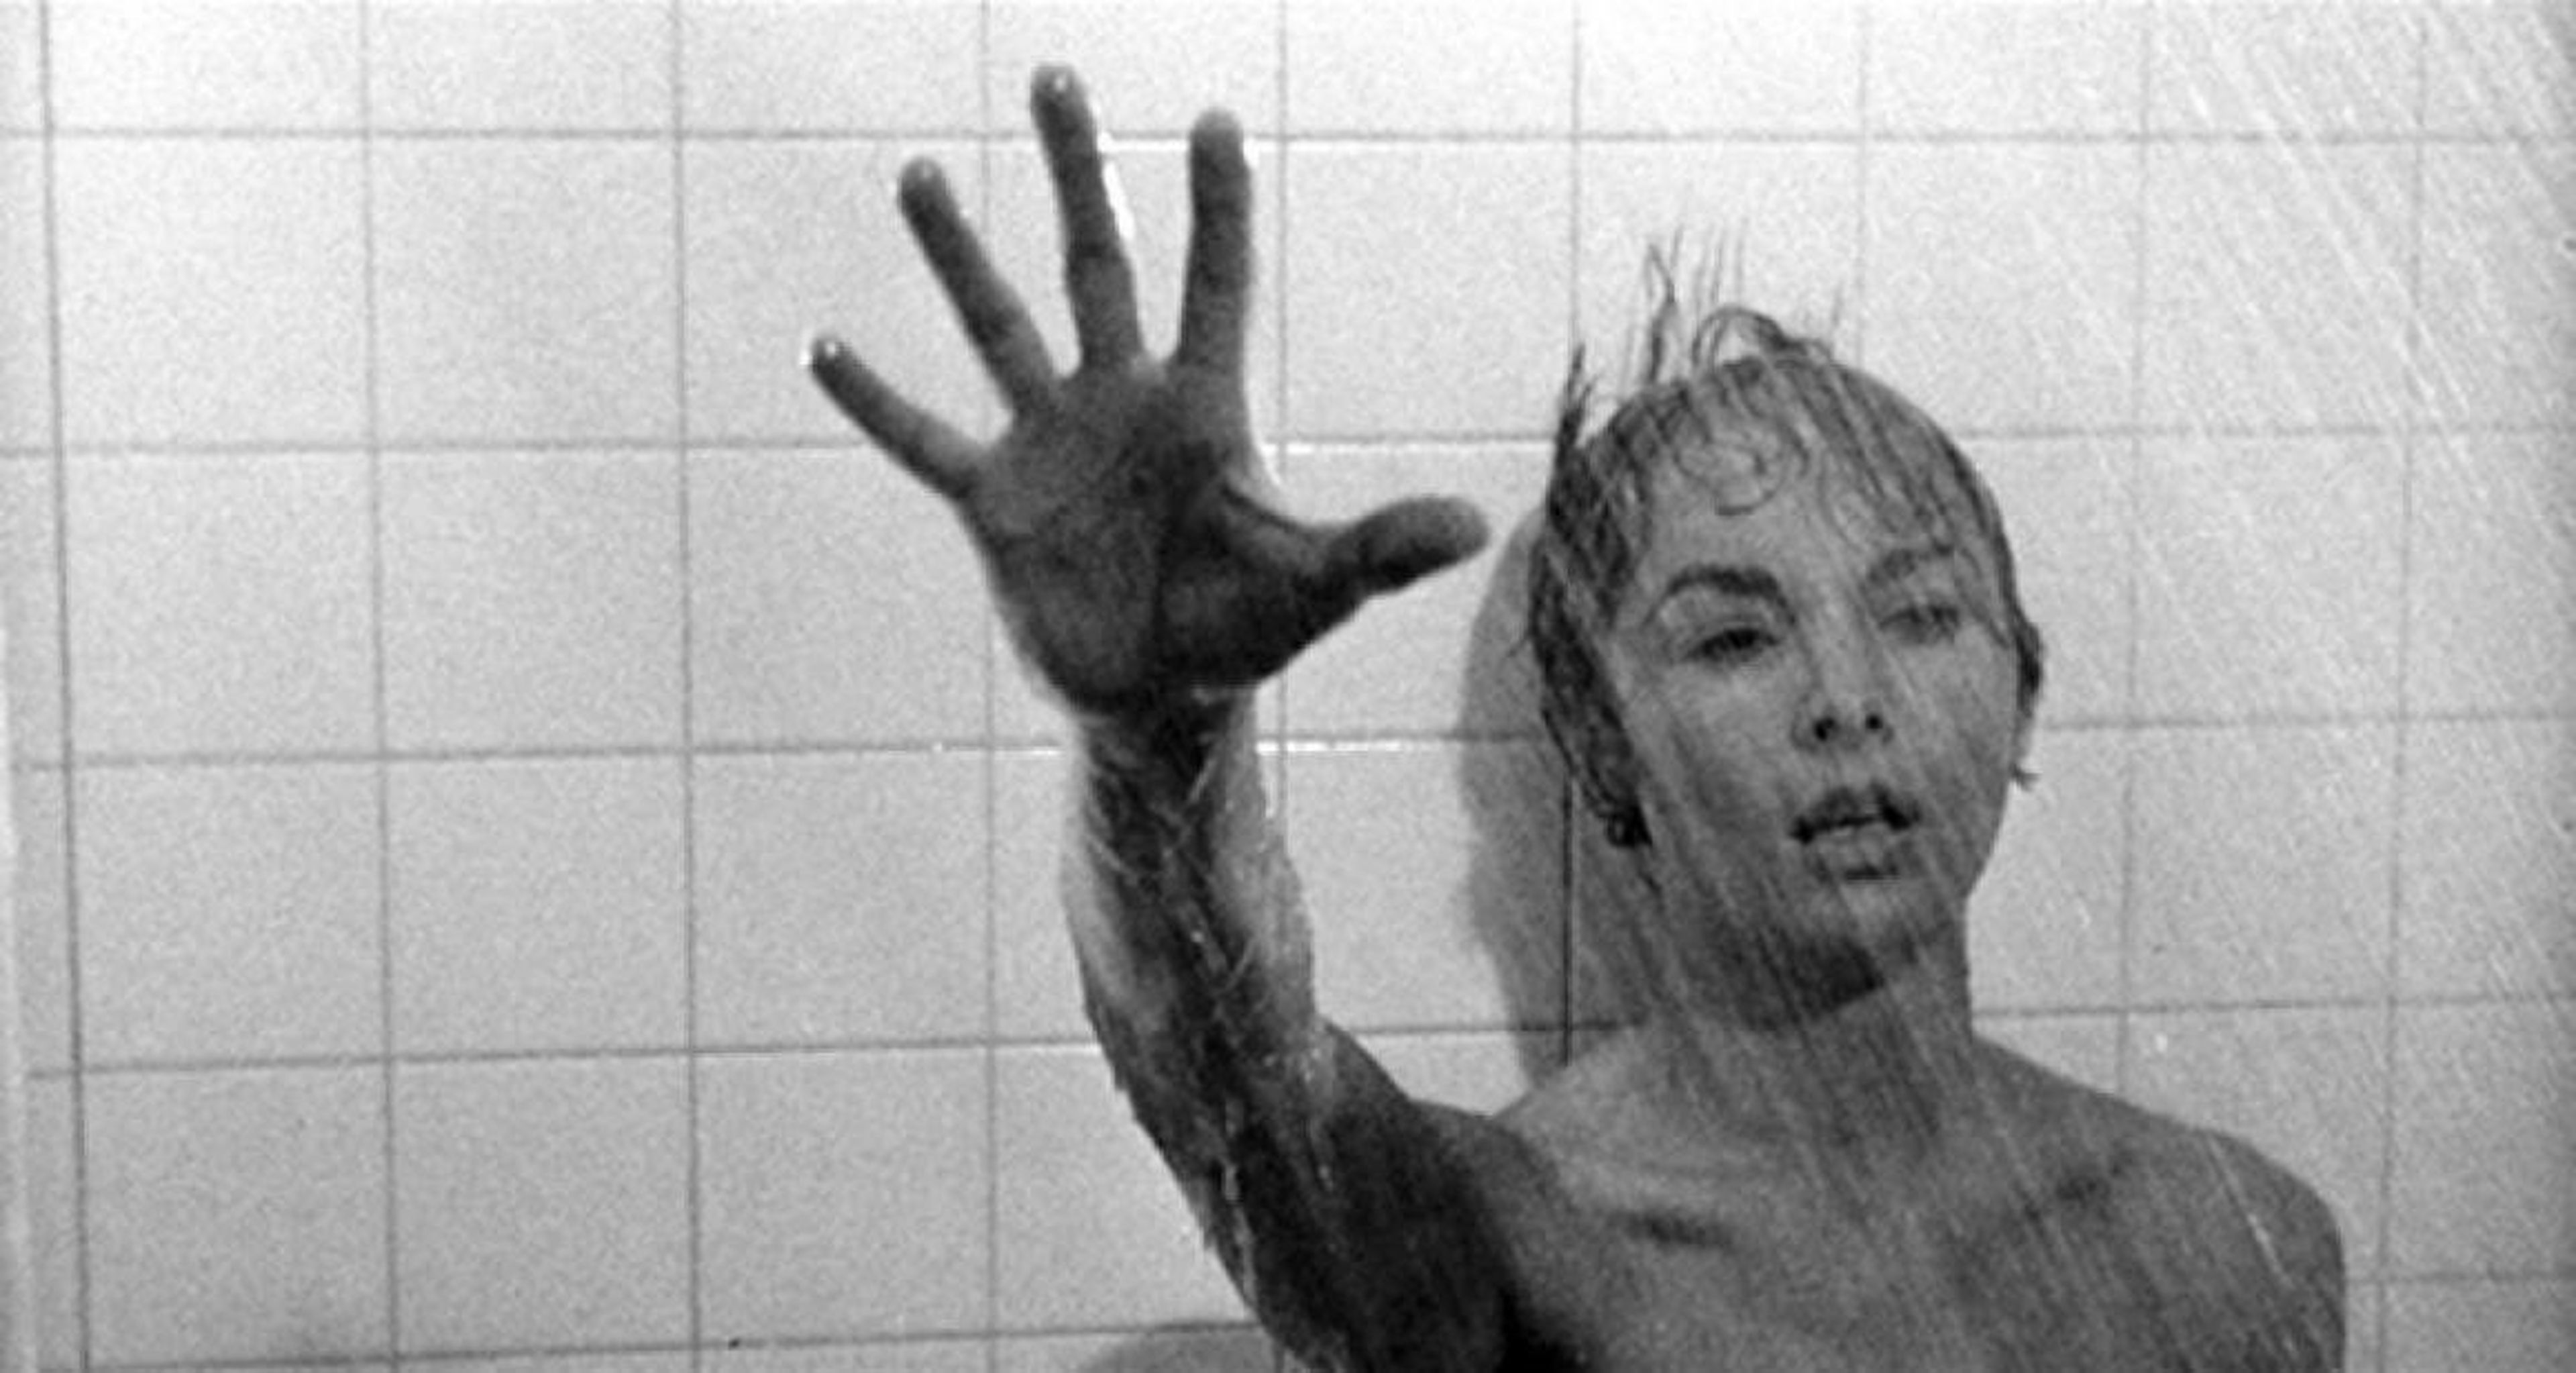 18. "Psycho" (1960)